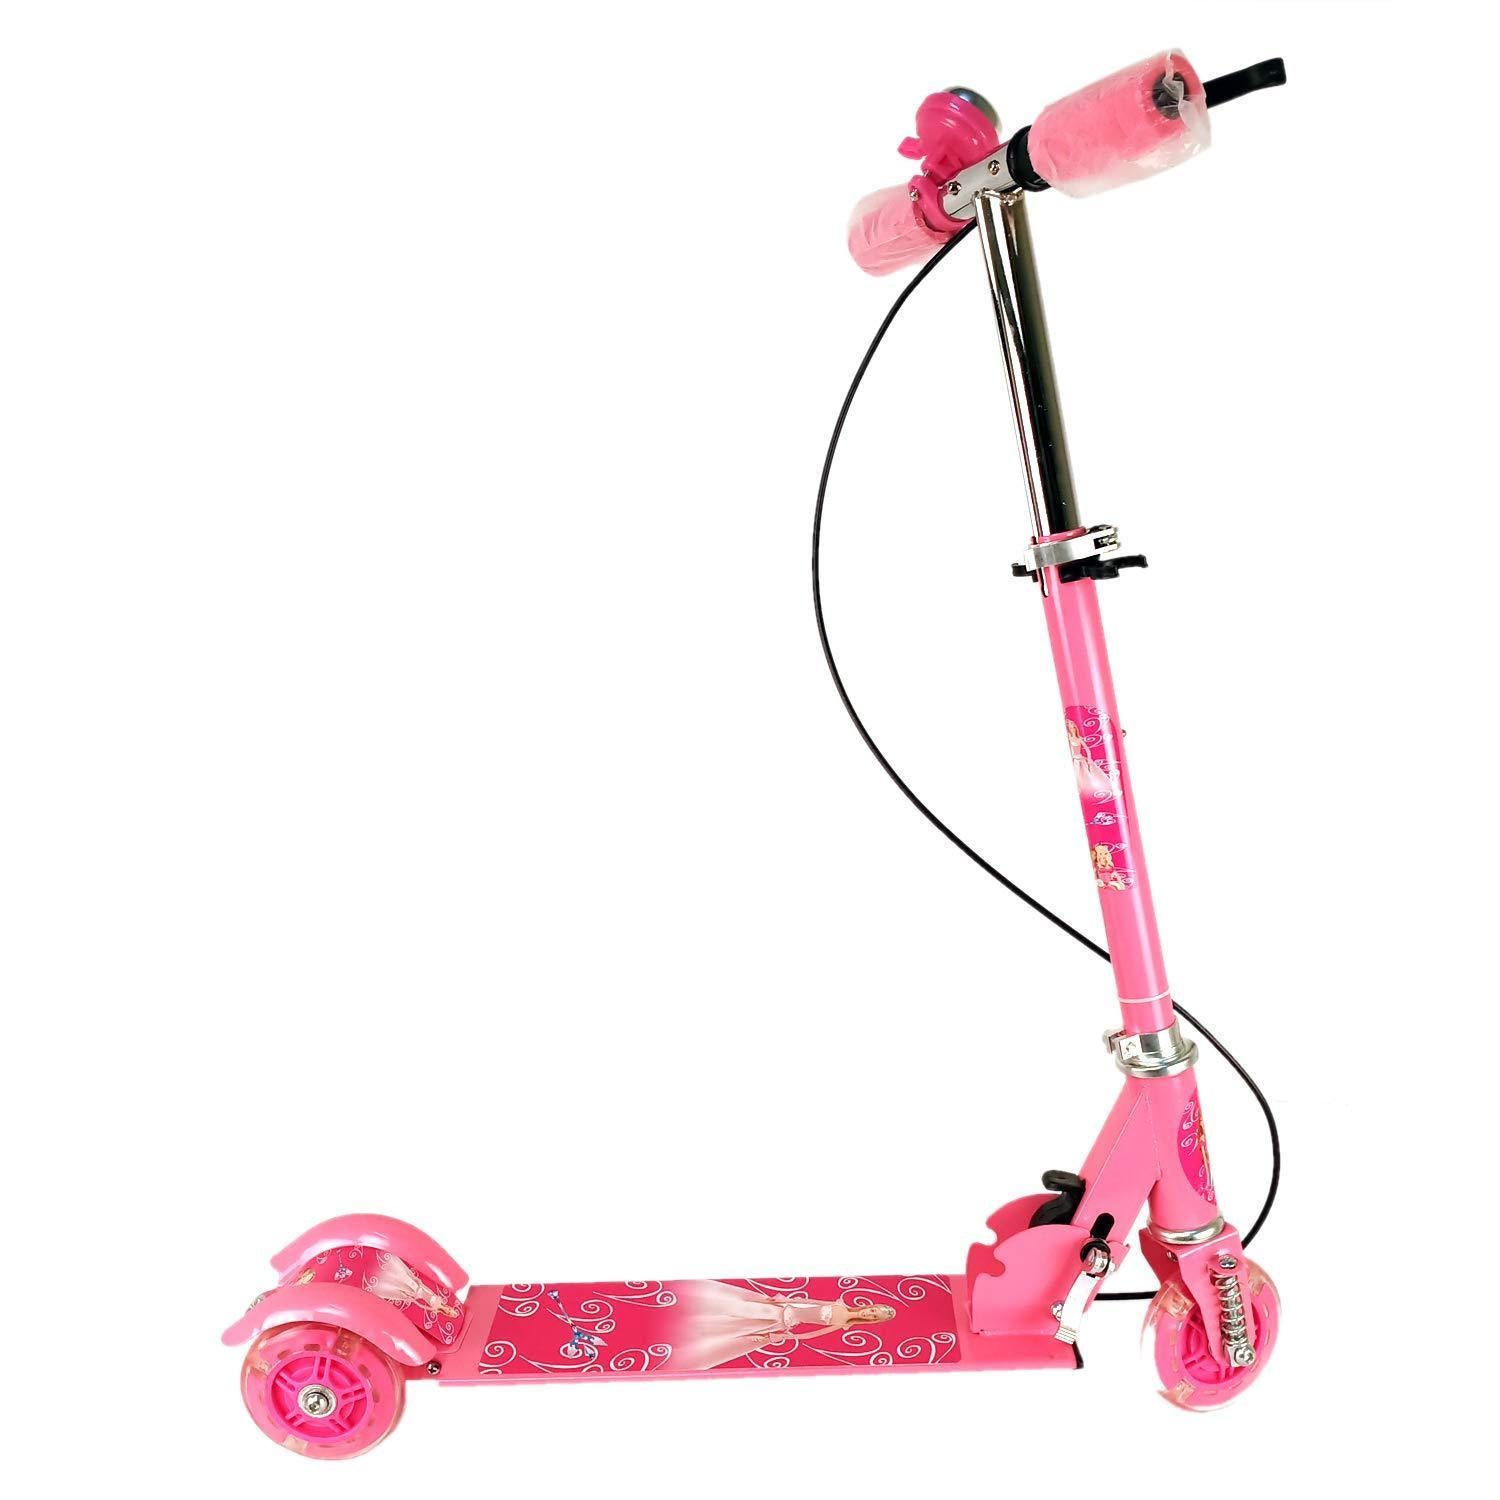 Prokick 3-Wheeler (Led Light) Road Runner Scooter for Kids- Pink - Best Price online Prokicksports.com